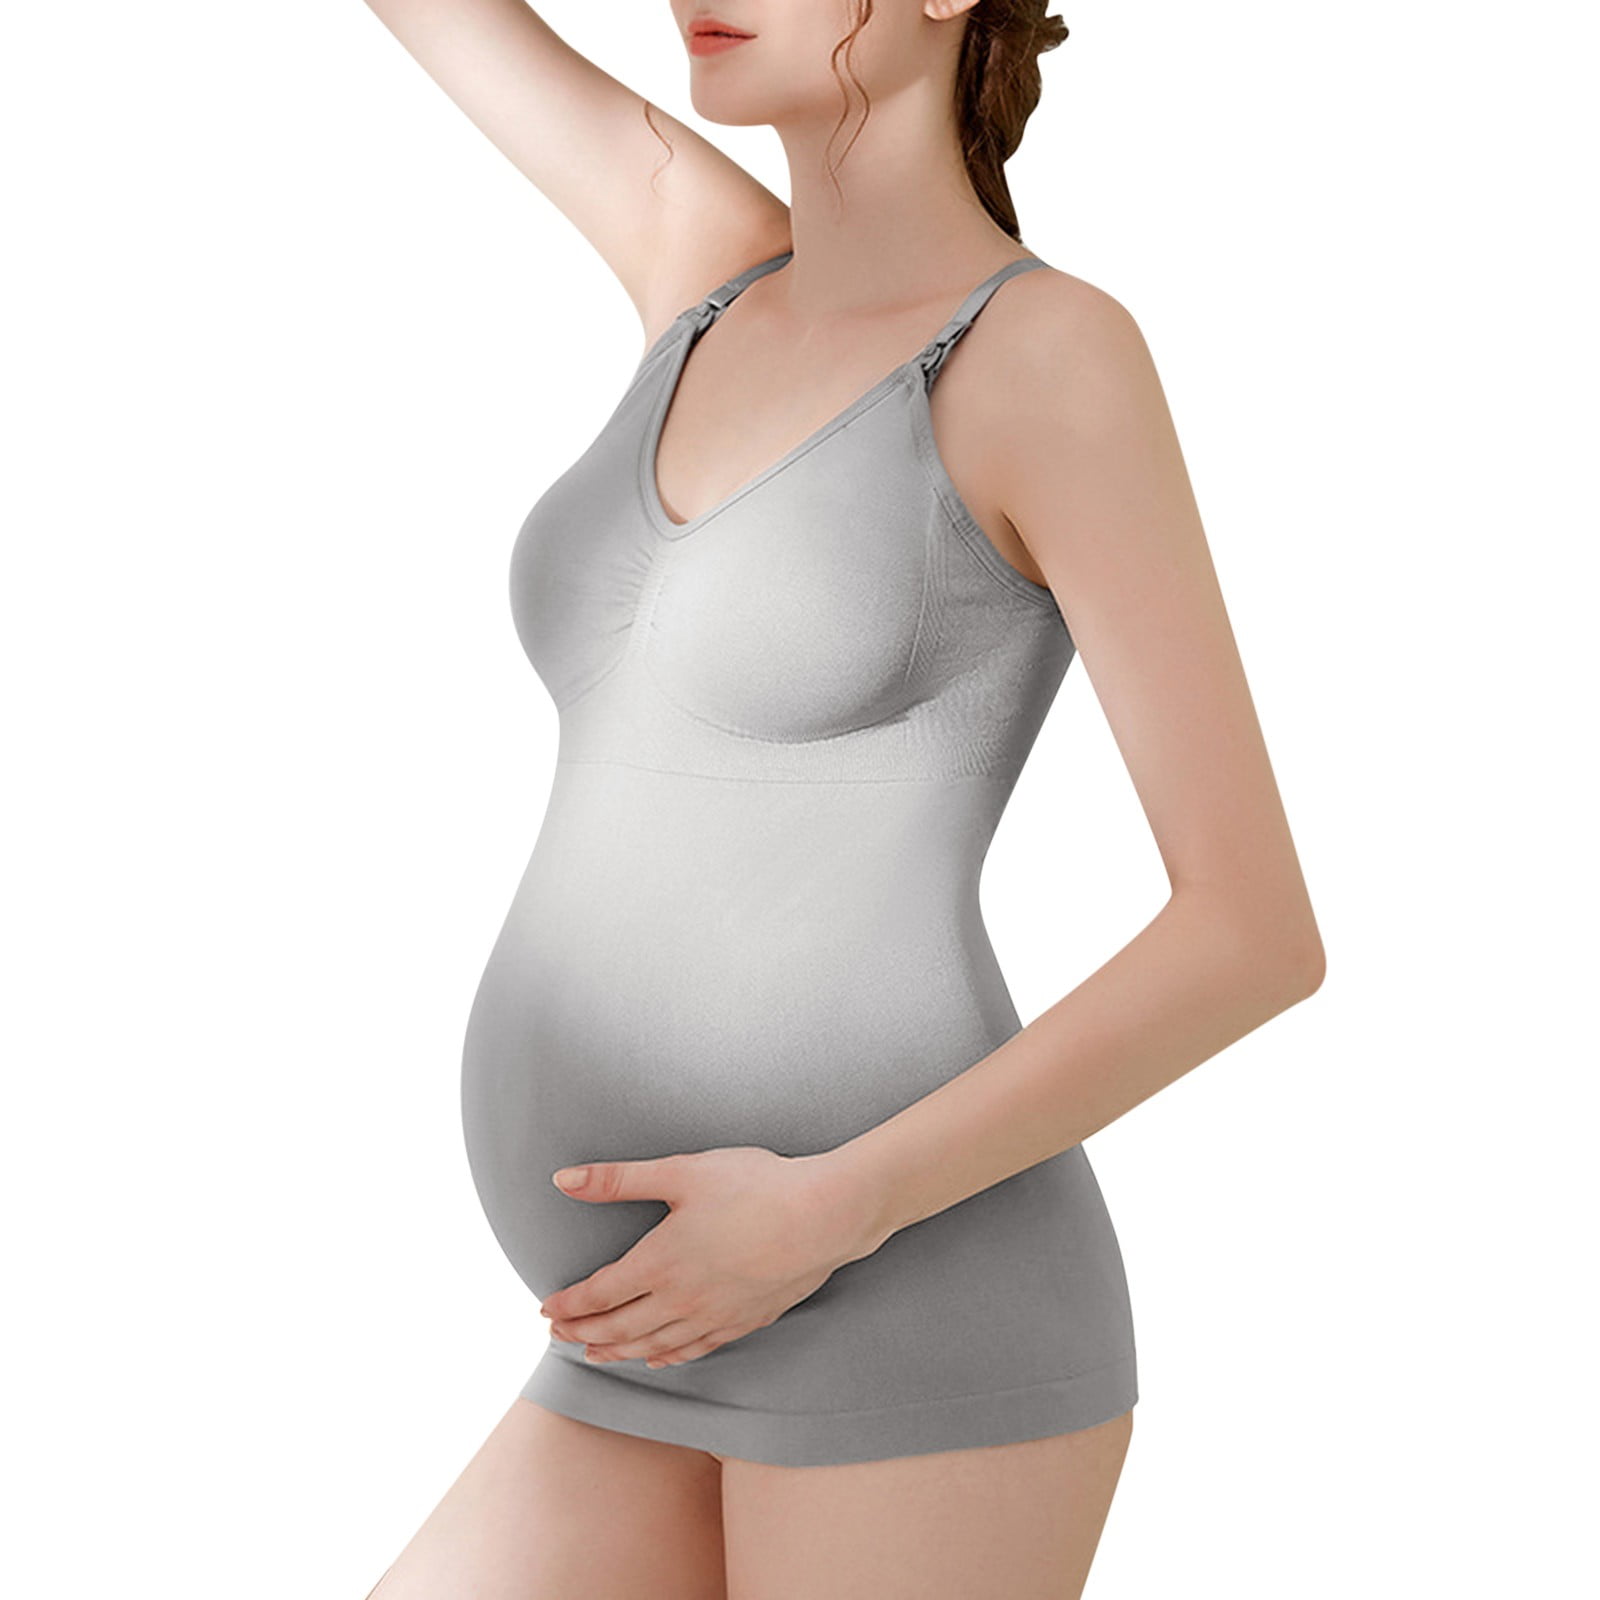 Ketyyh-chn99 Women's Maternity Nursing Tank Tops Camisole Basic Undershirt  Pregnancy Sleep Bra White,S